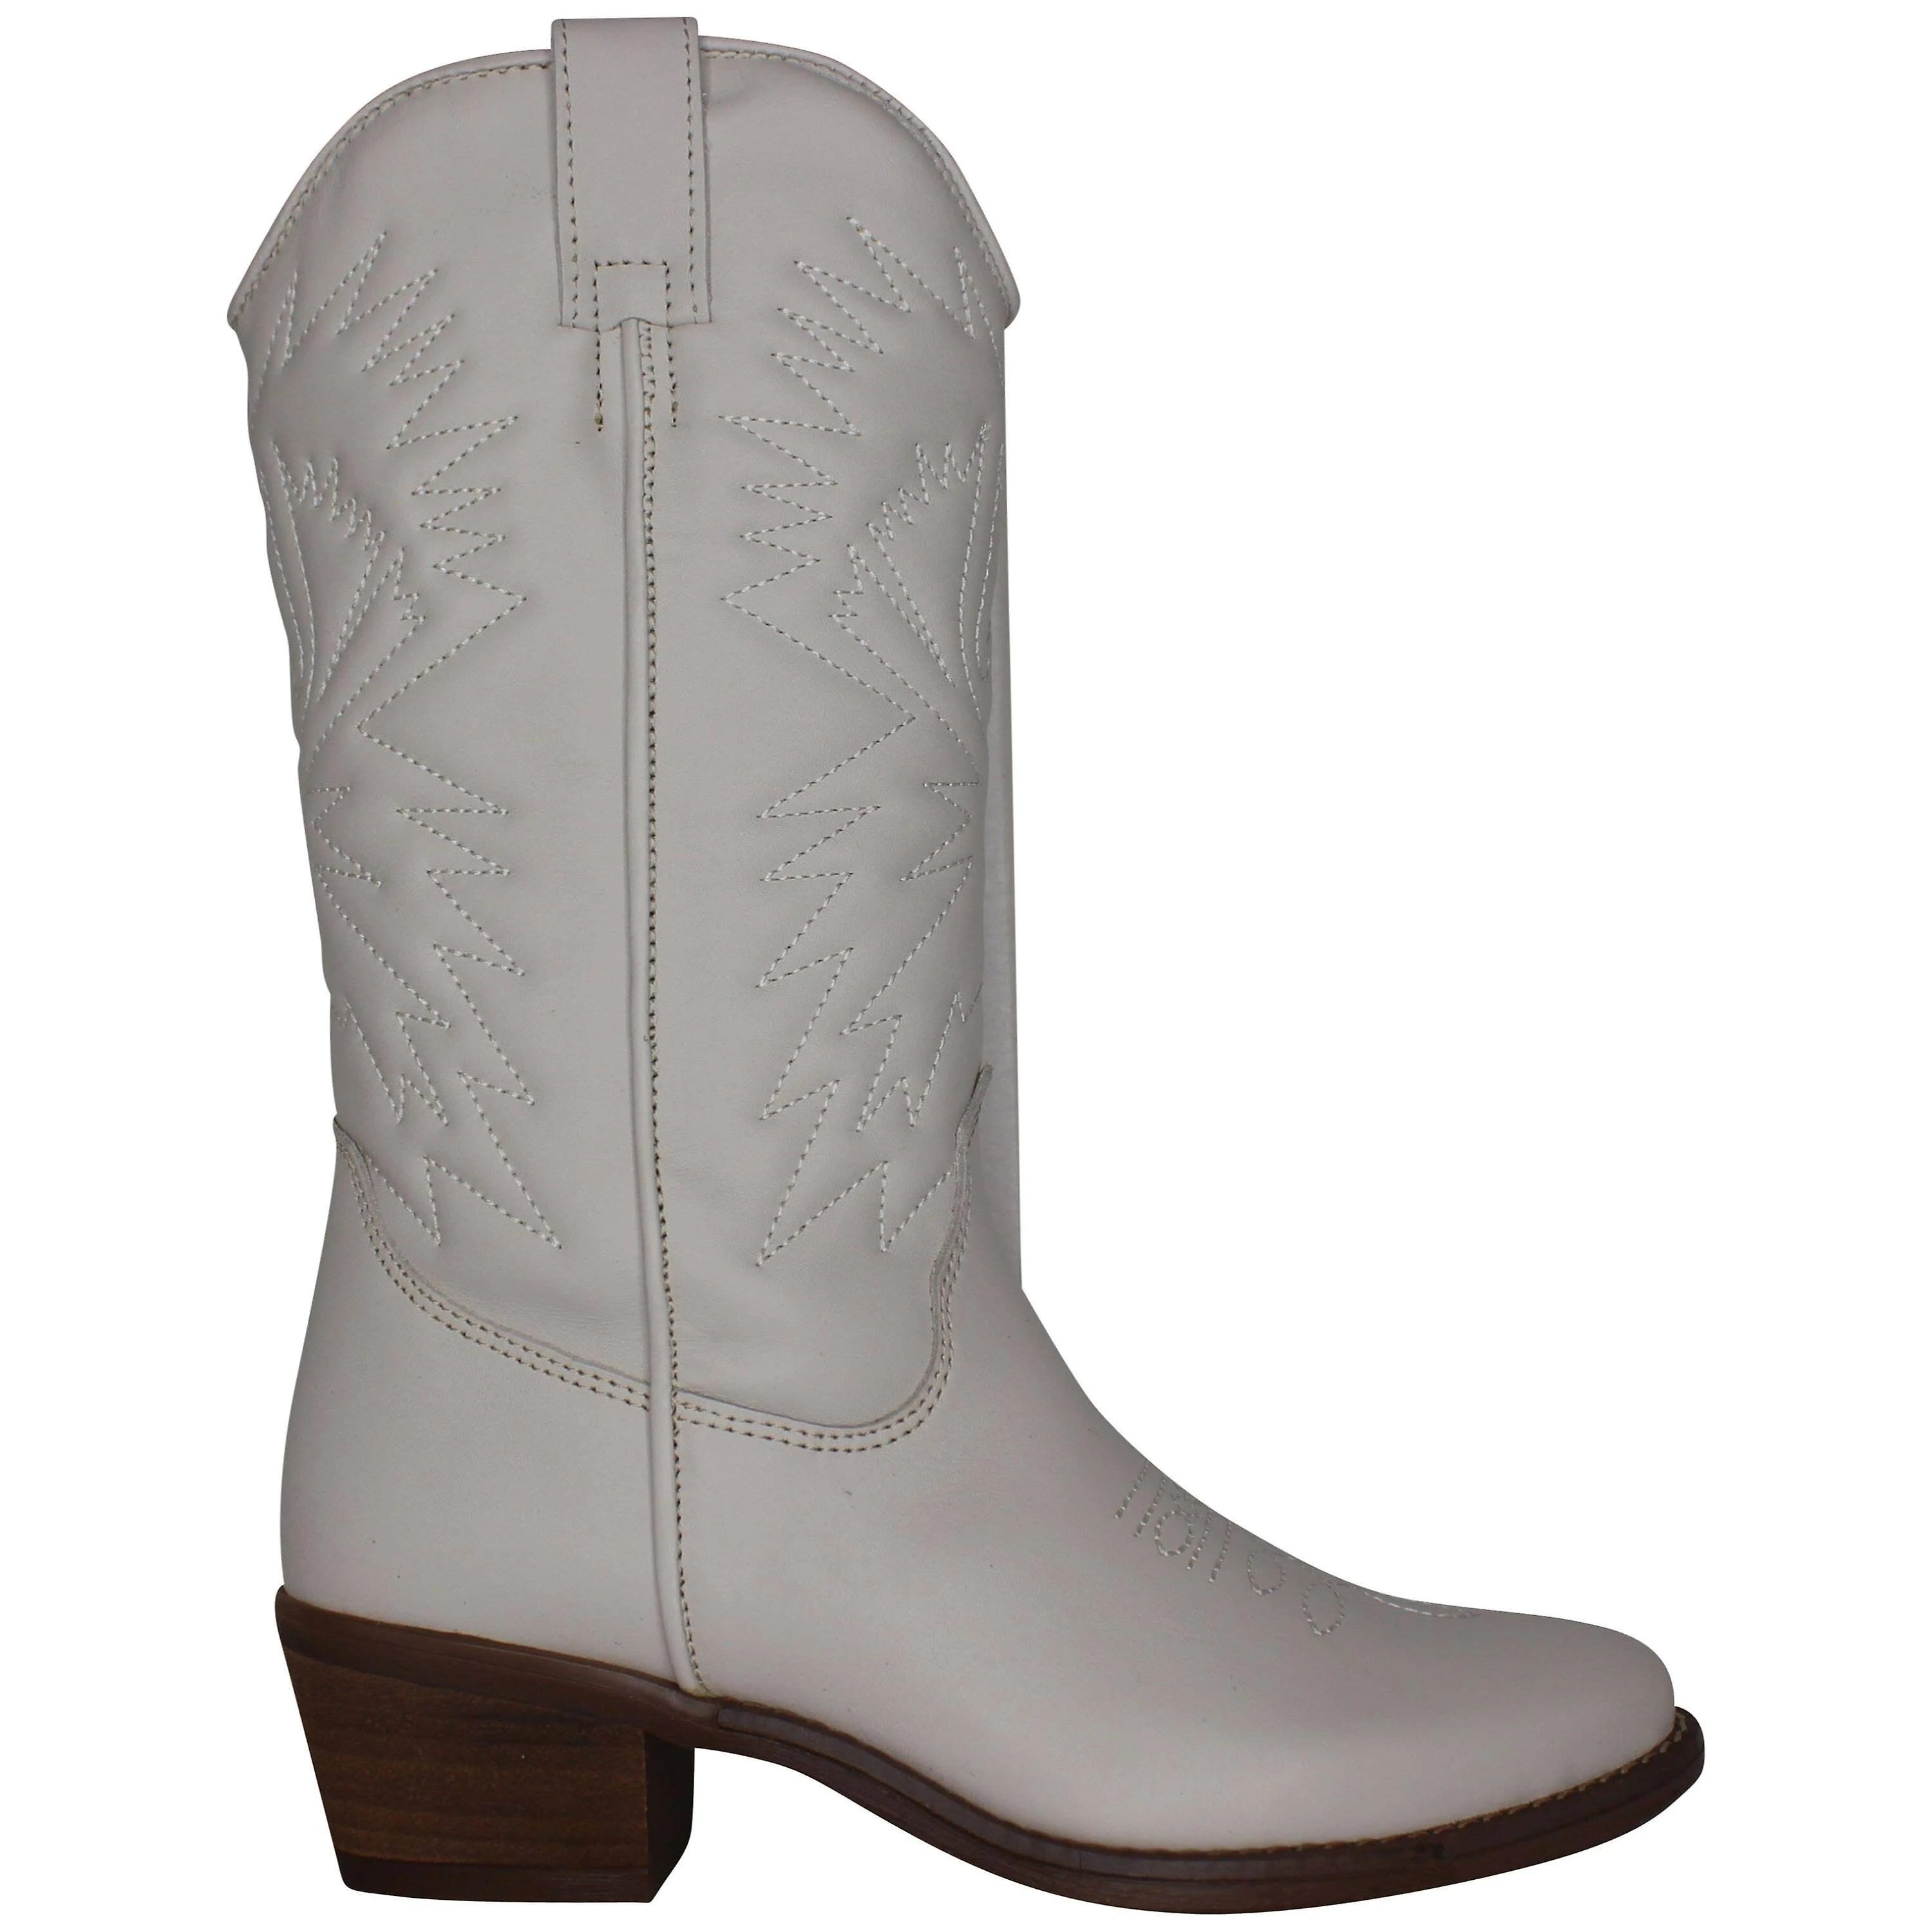 Stylish Steve Madden White Leather Women's Boots | Image